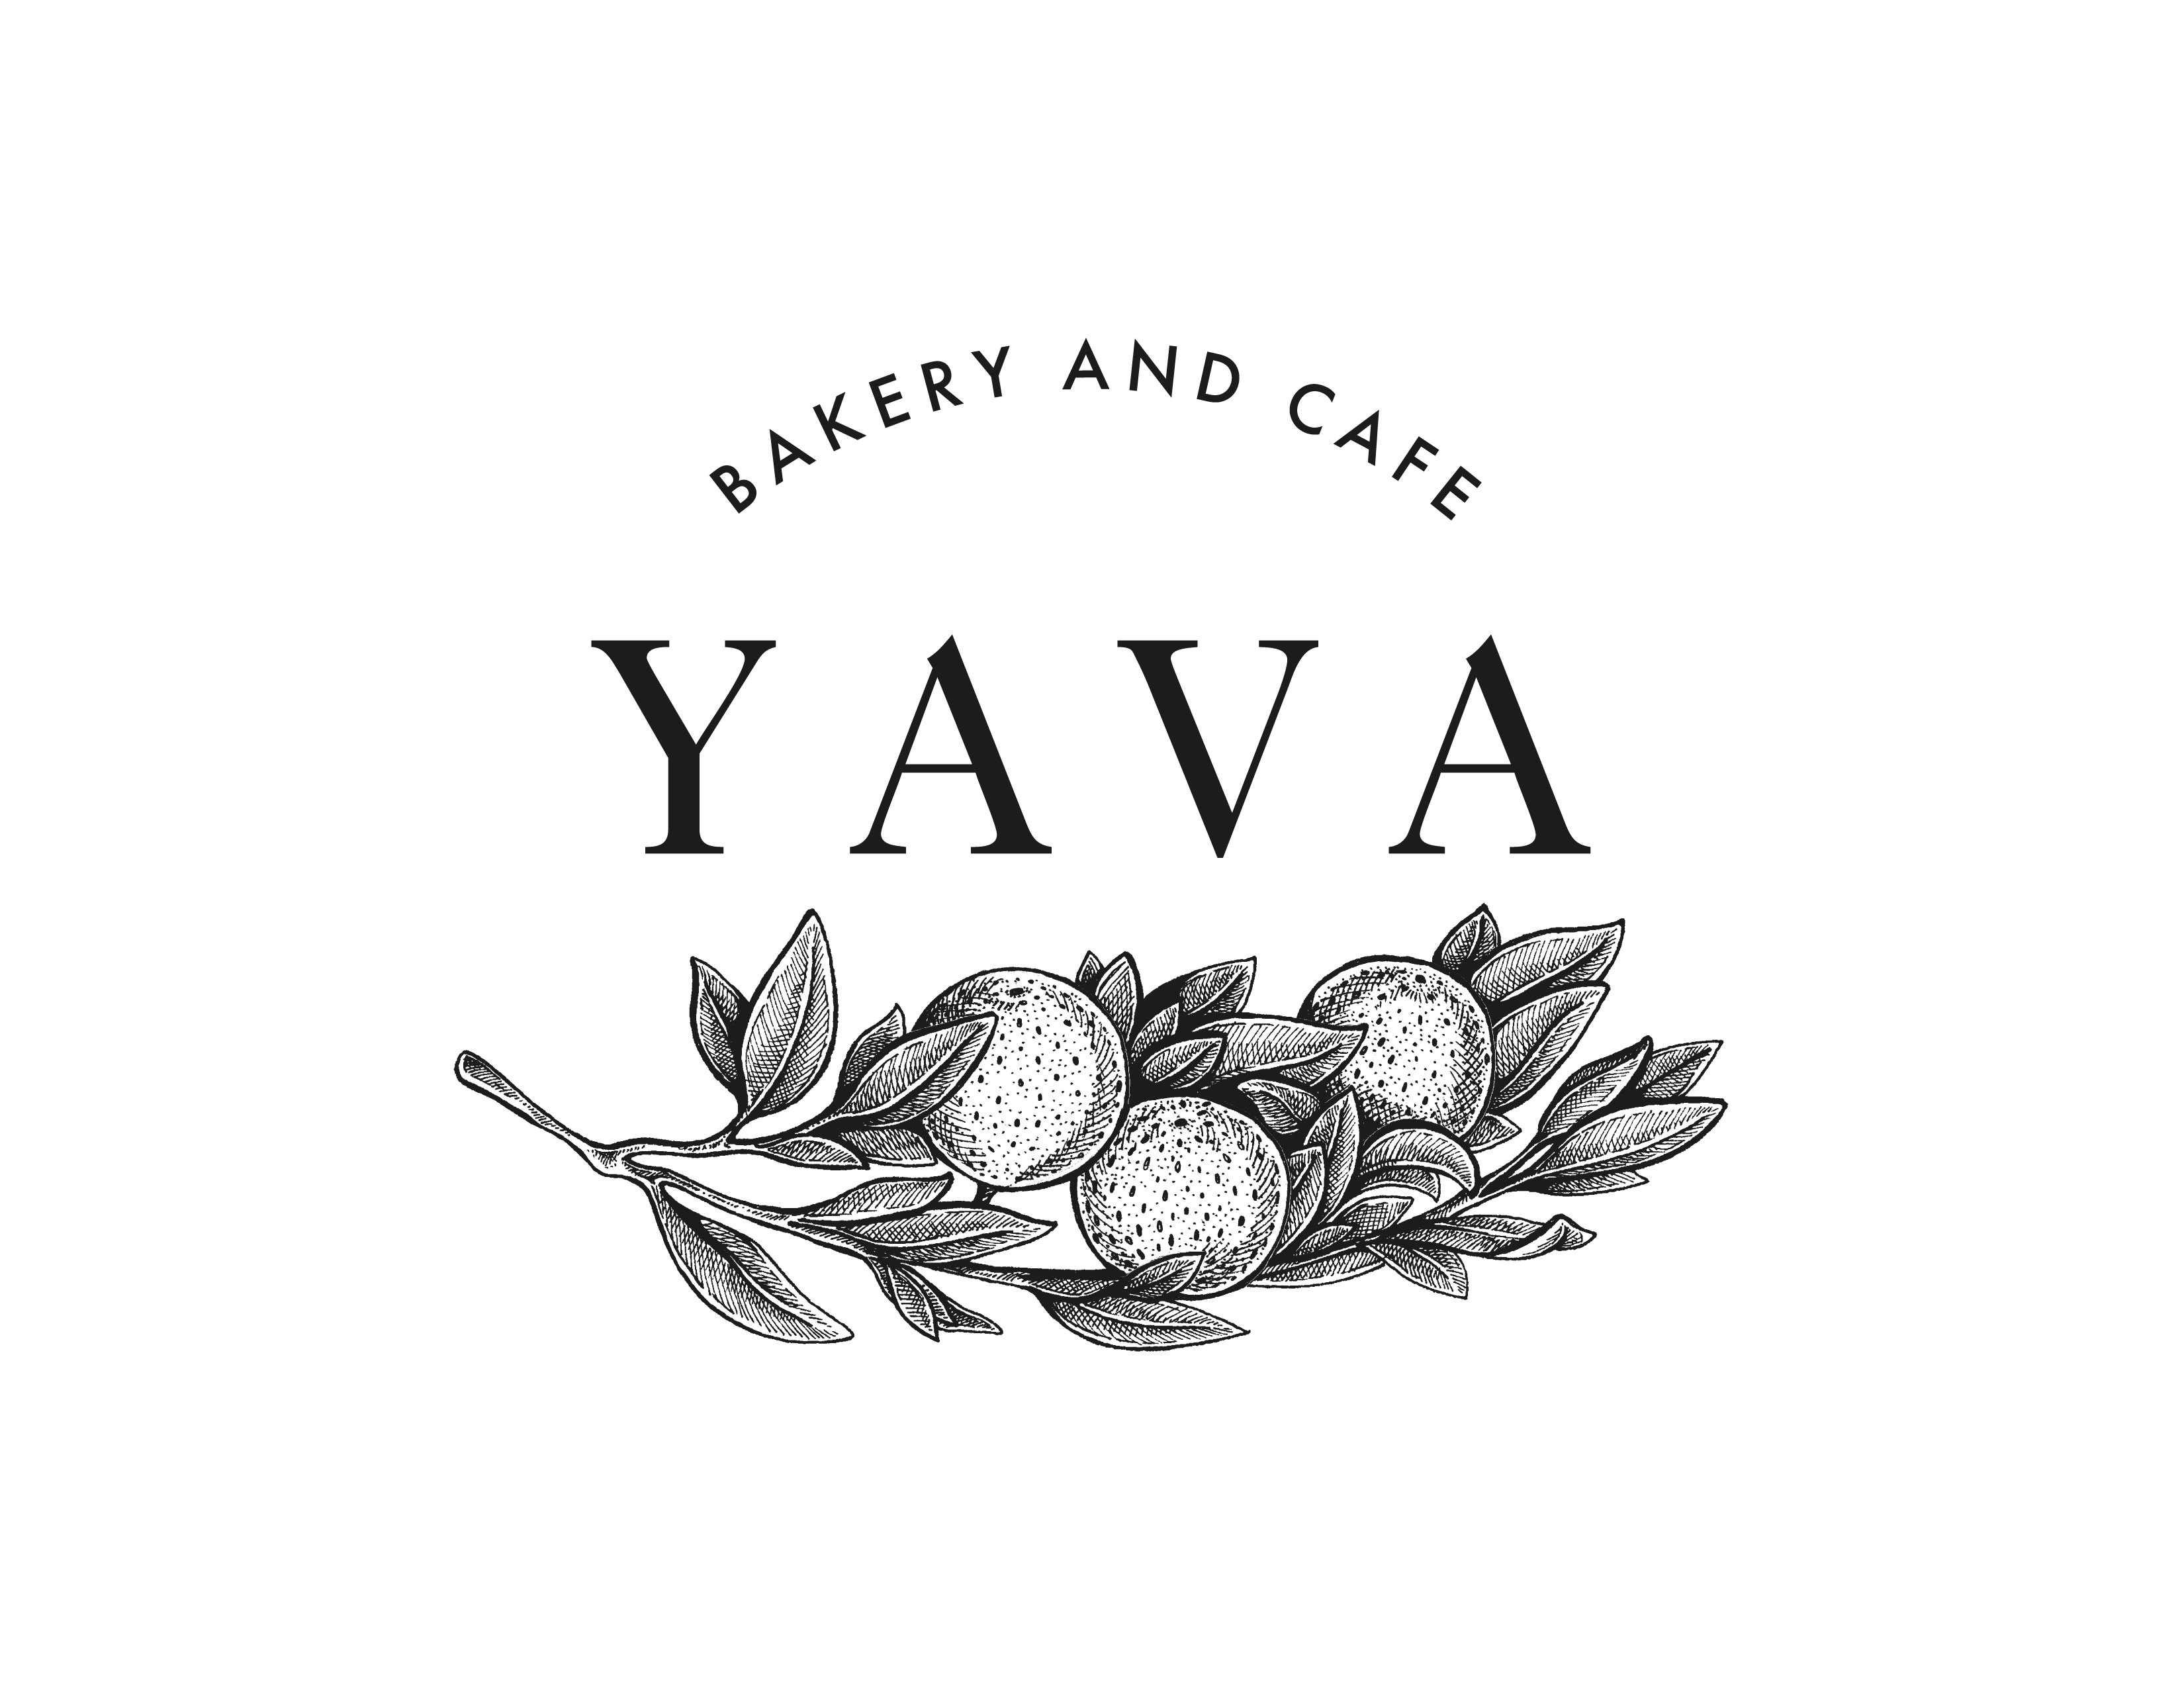 YAVA Bakery and Cafe